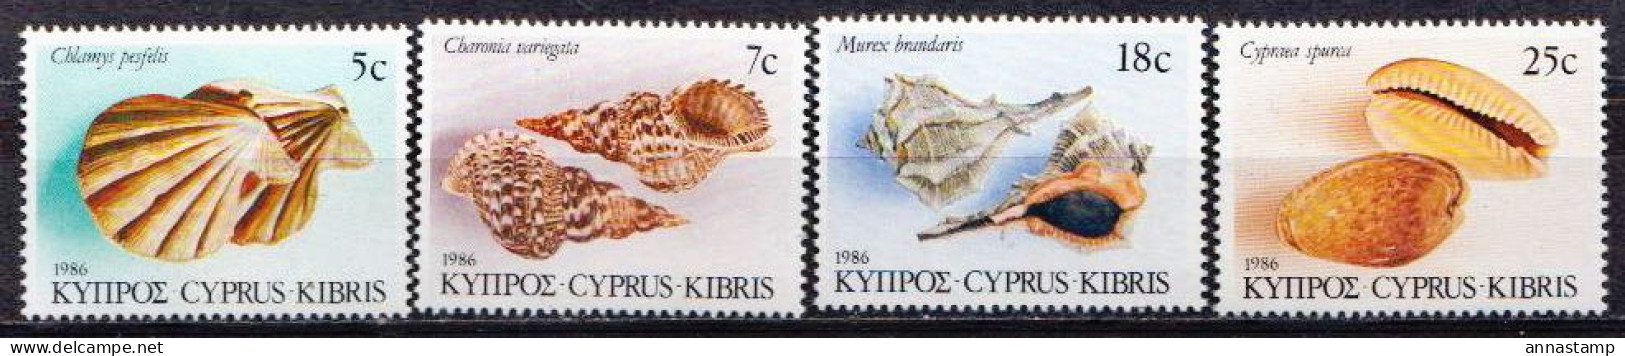 Cyprus MNH Set - Coneshells